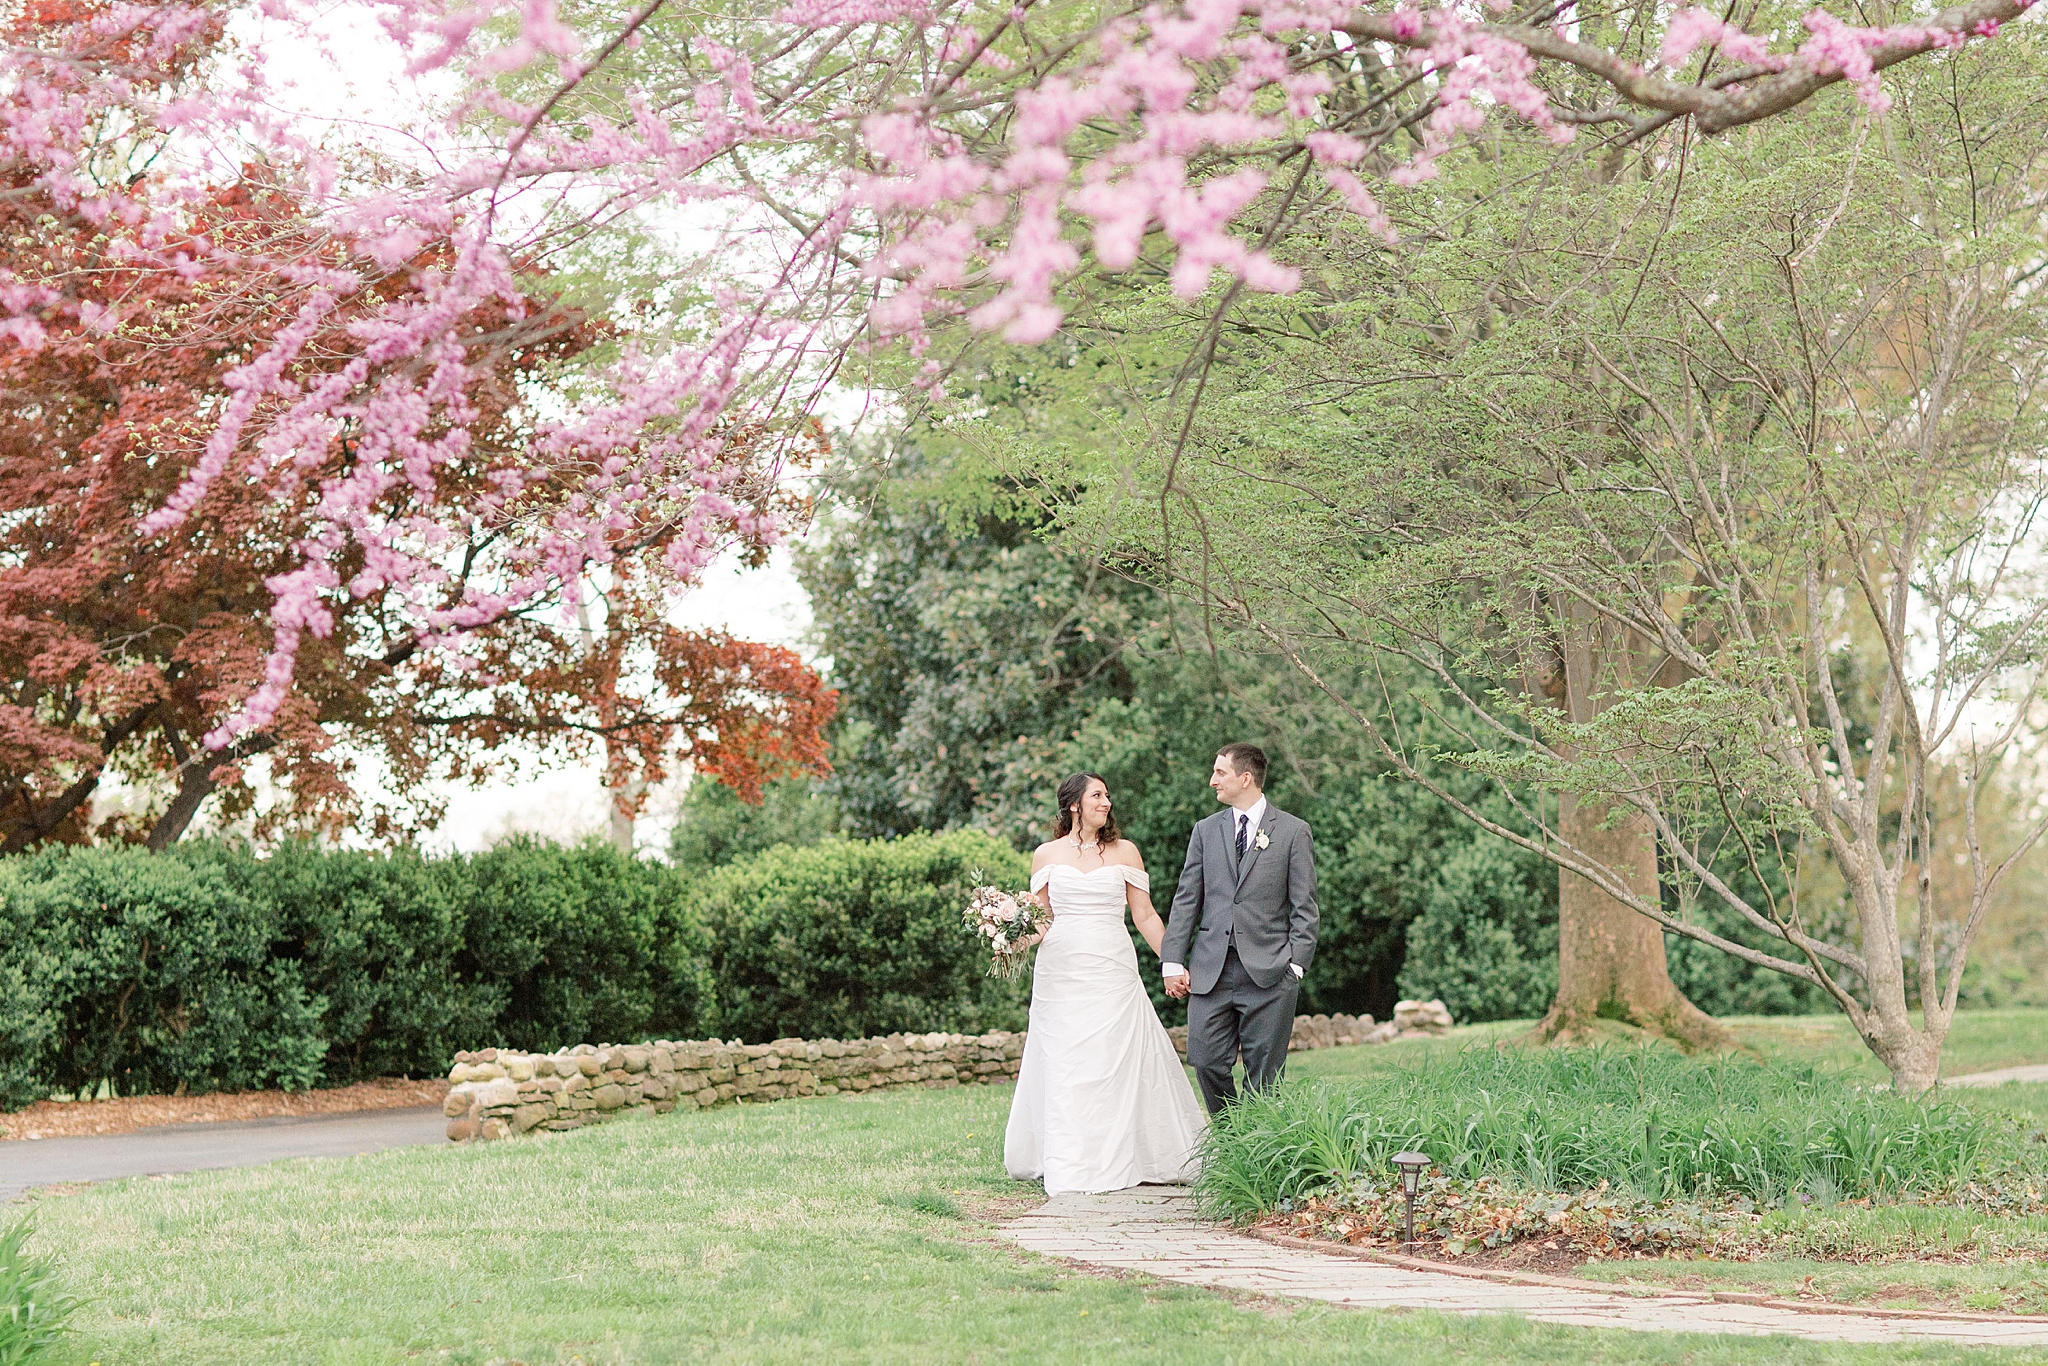 A romantic garden wedding at Hollin Hall in Alexandria, VA.